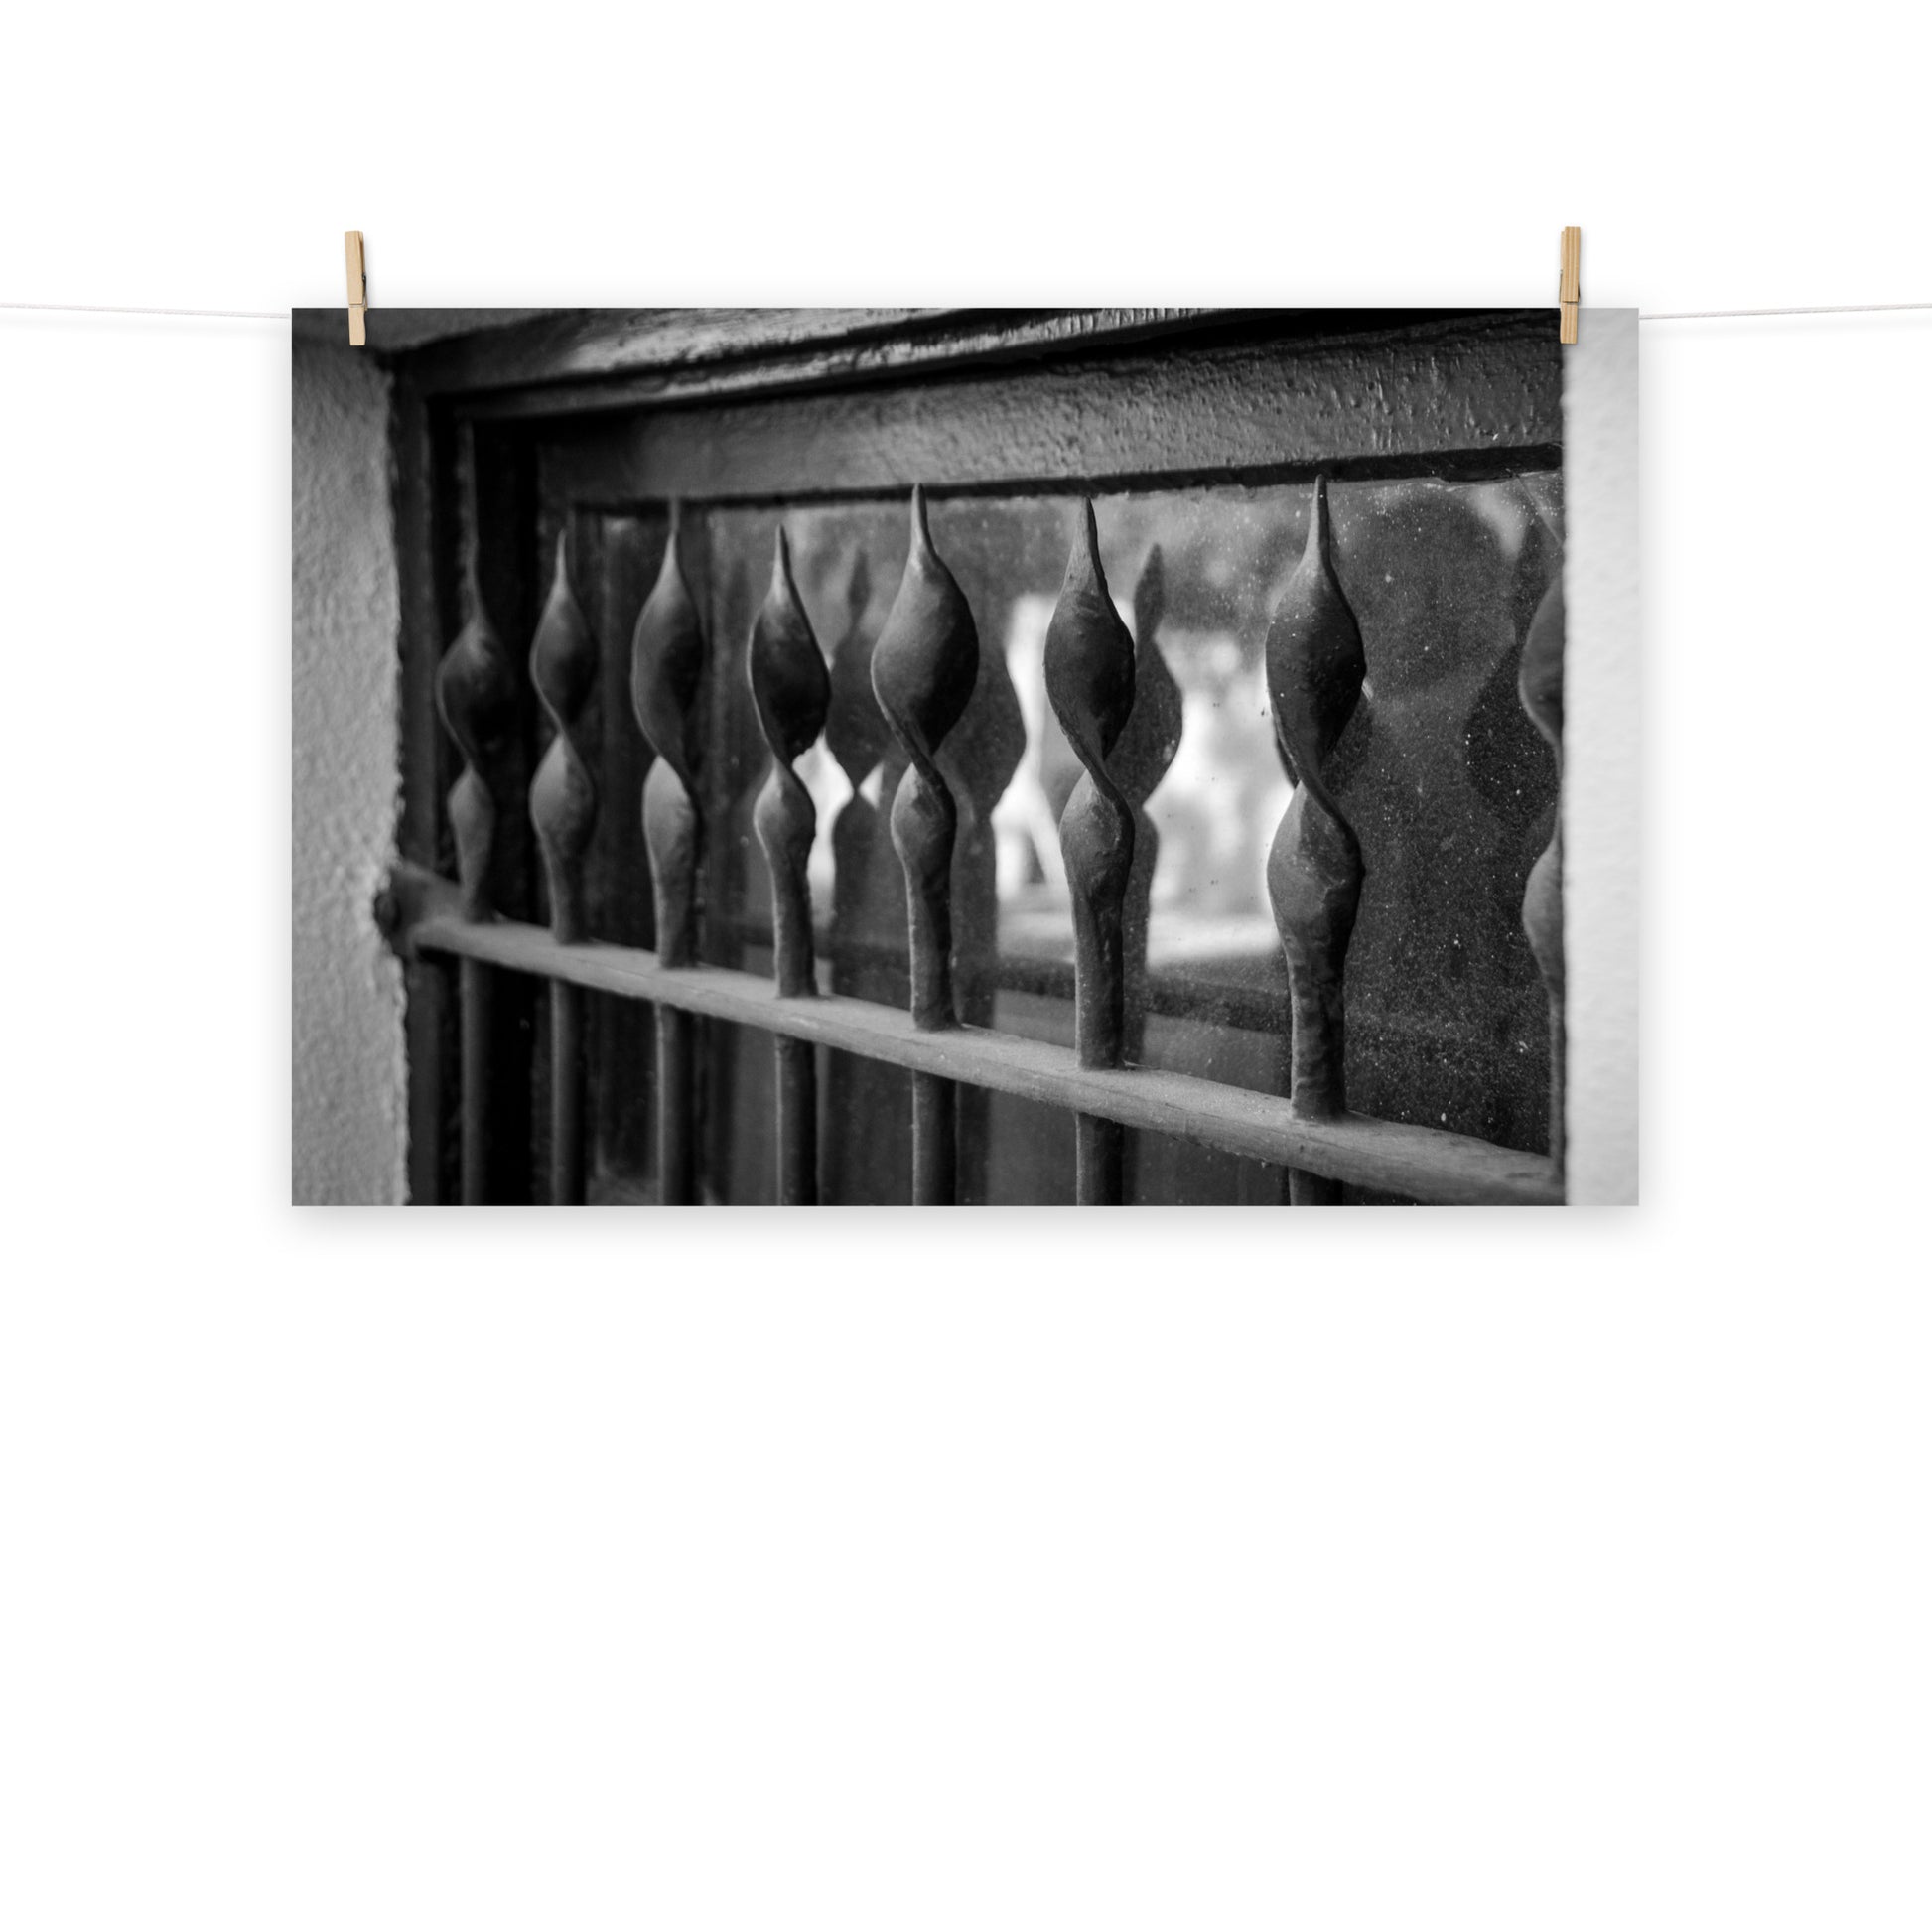 Architectural / Industrial / Cityscape Abstract Decor Wrought Iron Window Post Savannah Ga Loose Wall Art Print 8" x 10"